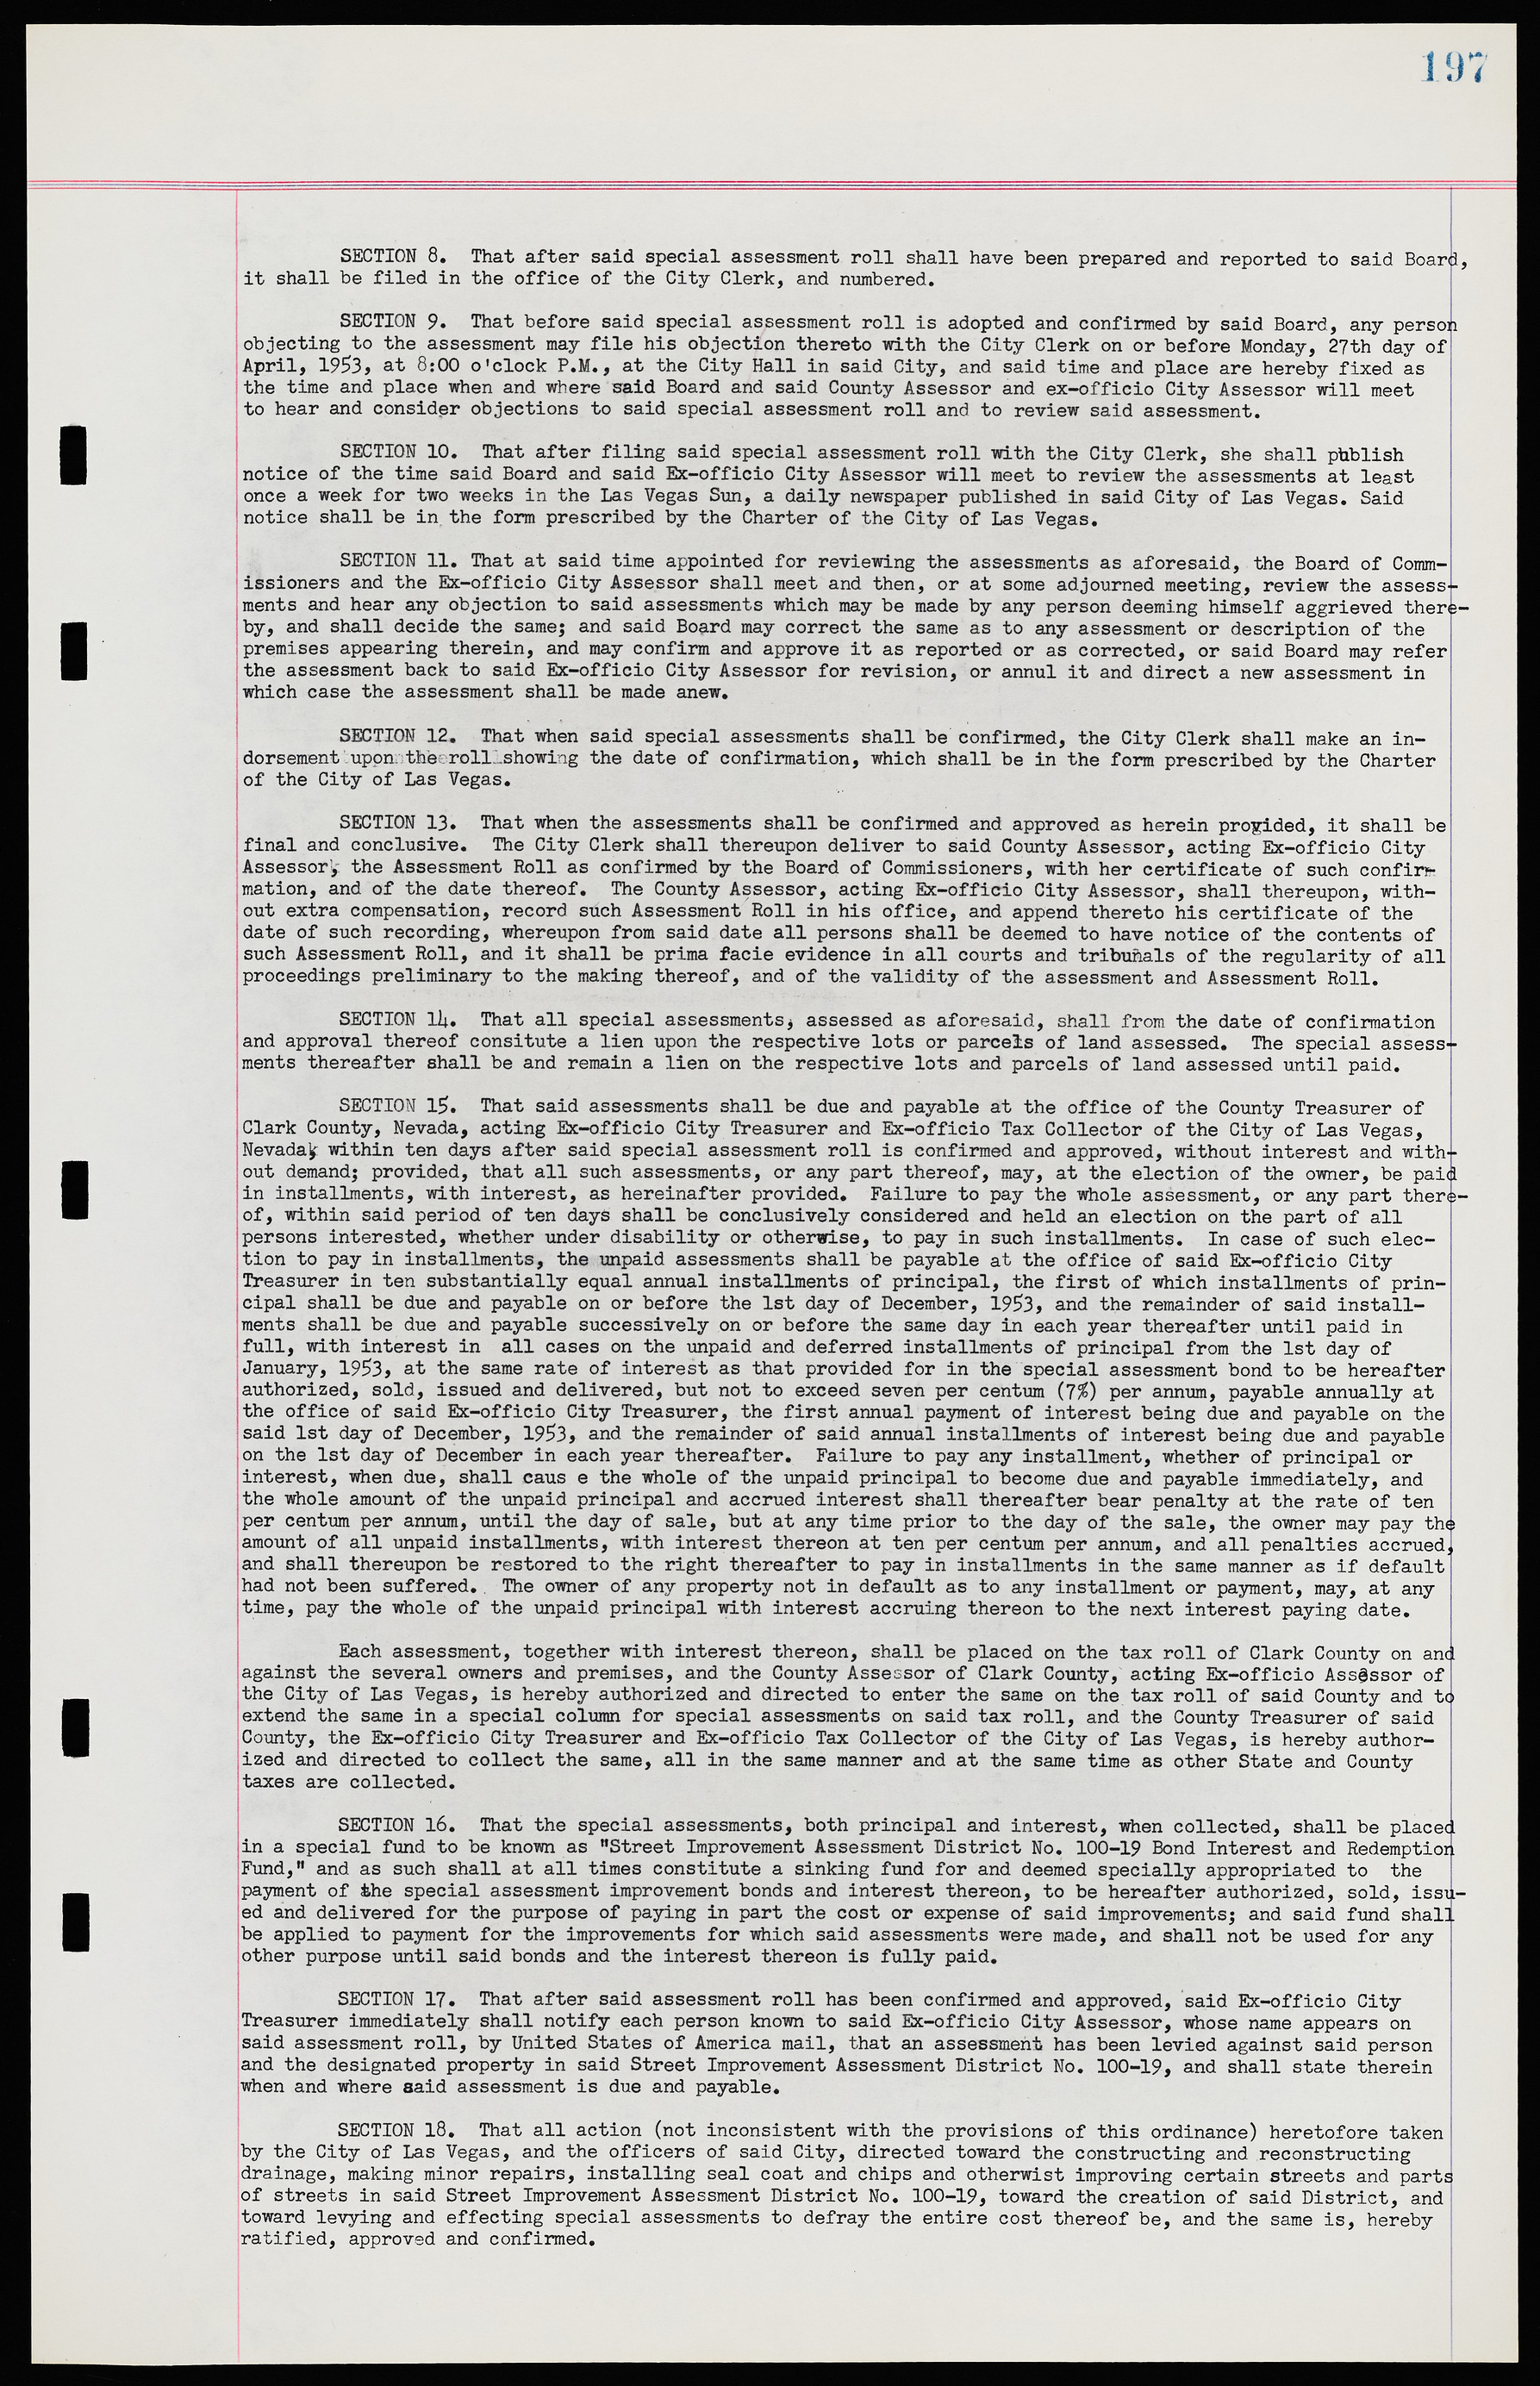 Las Vegas City Ordinances, November 13, 1950 to August 6, 1958, lvc000015-205